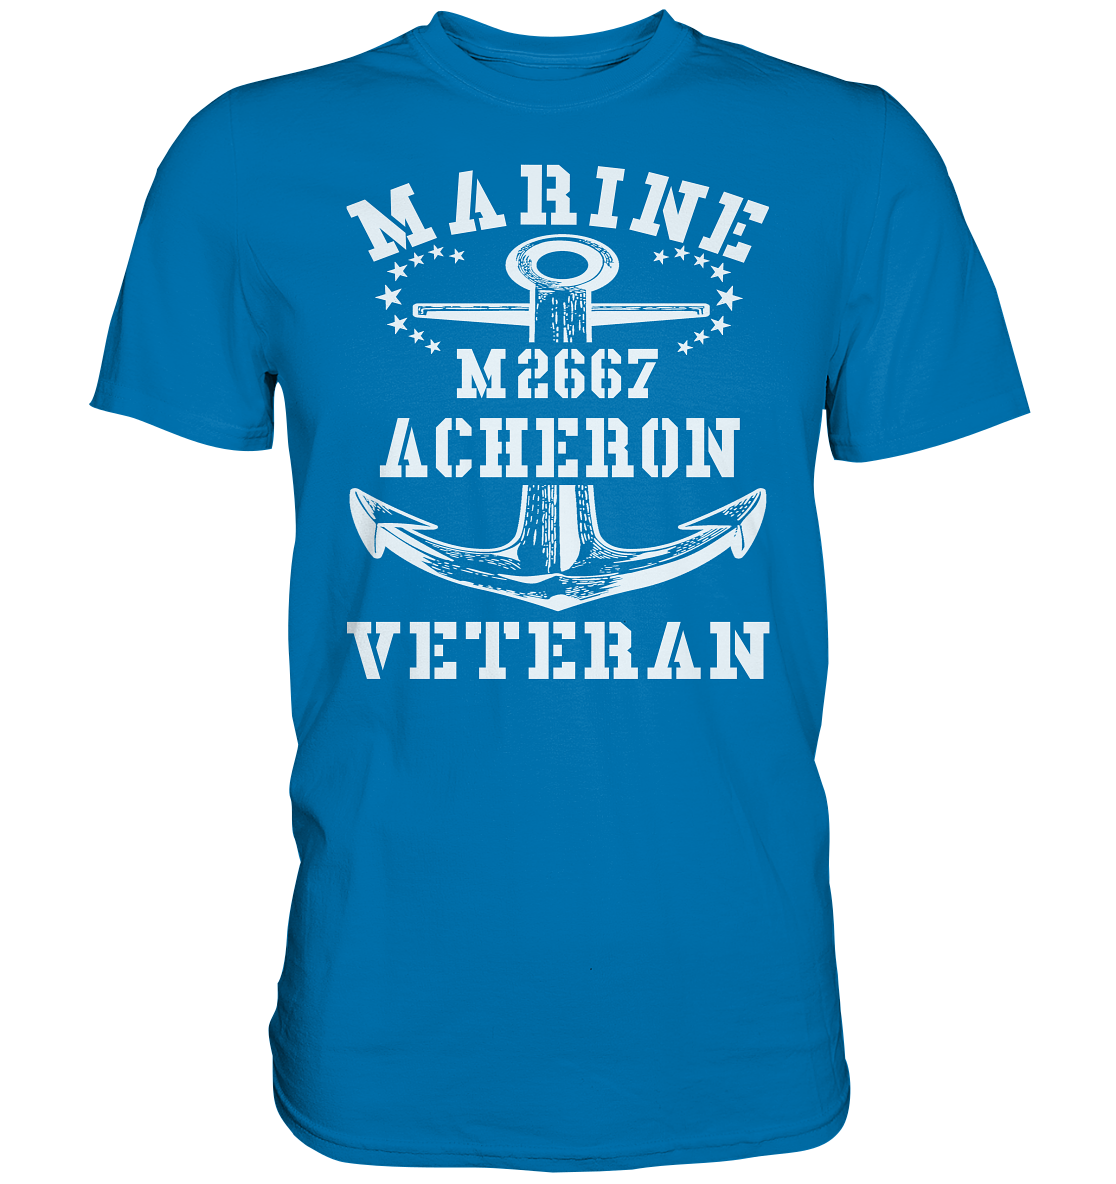 BiMi M2667 ACHERON Marine Veteran - Premium Shirt